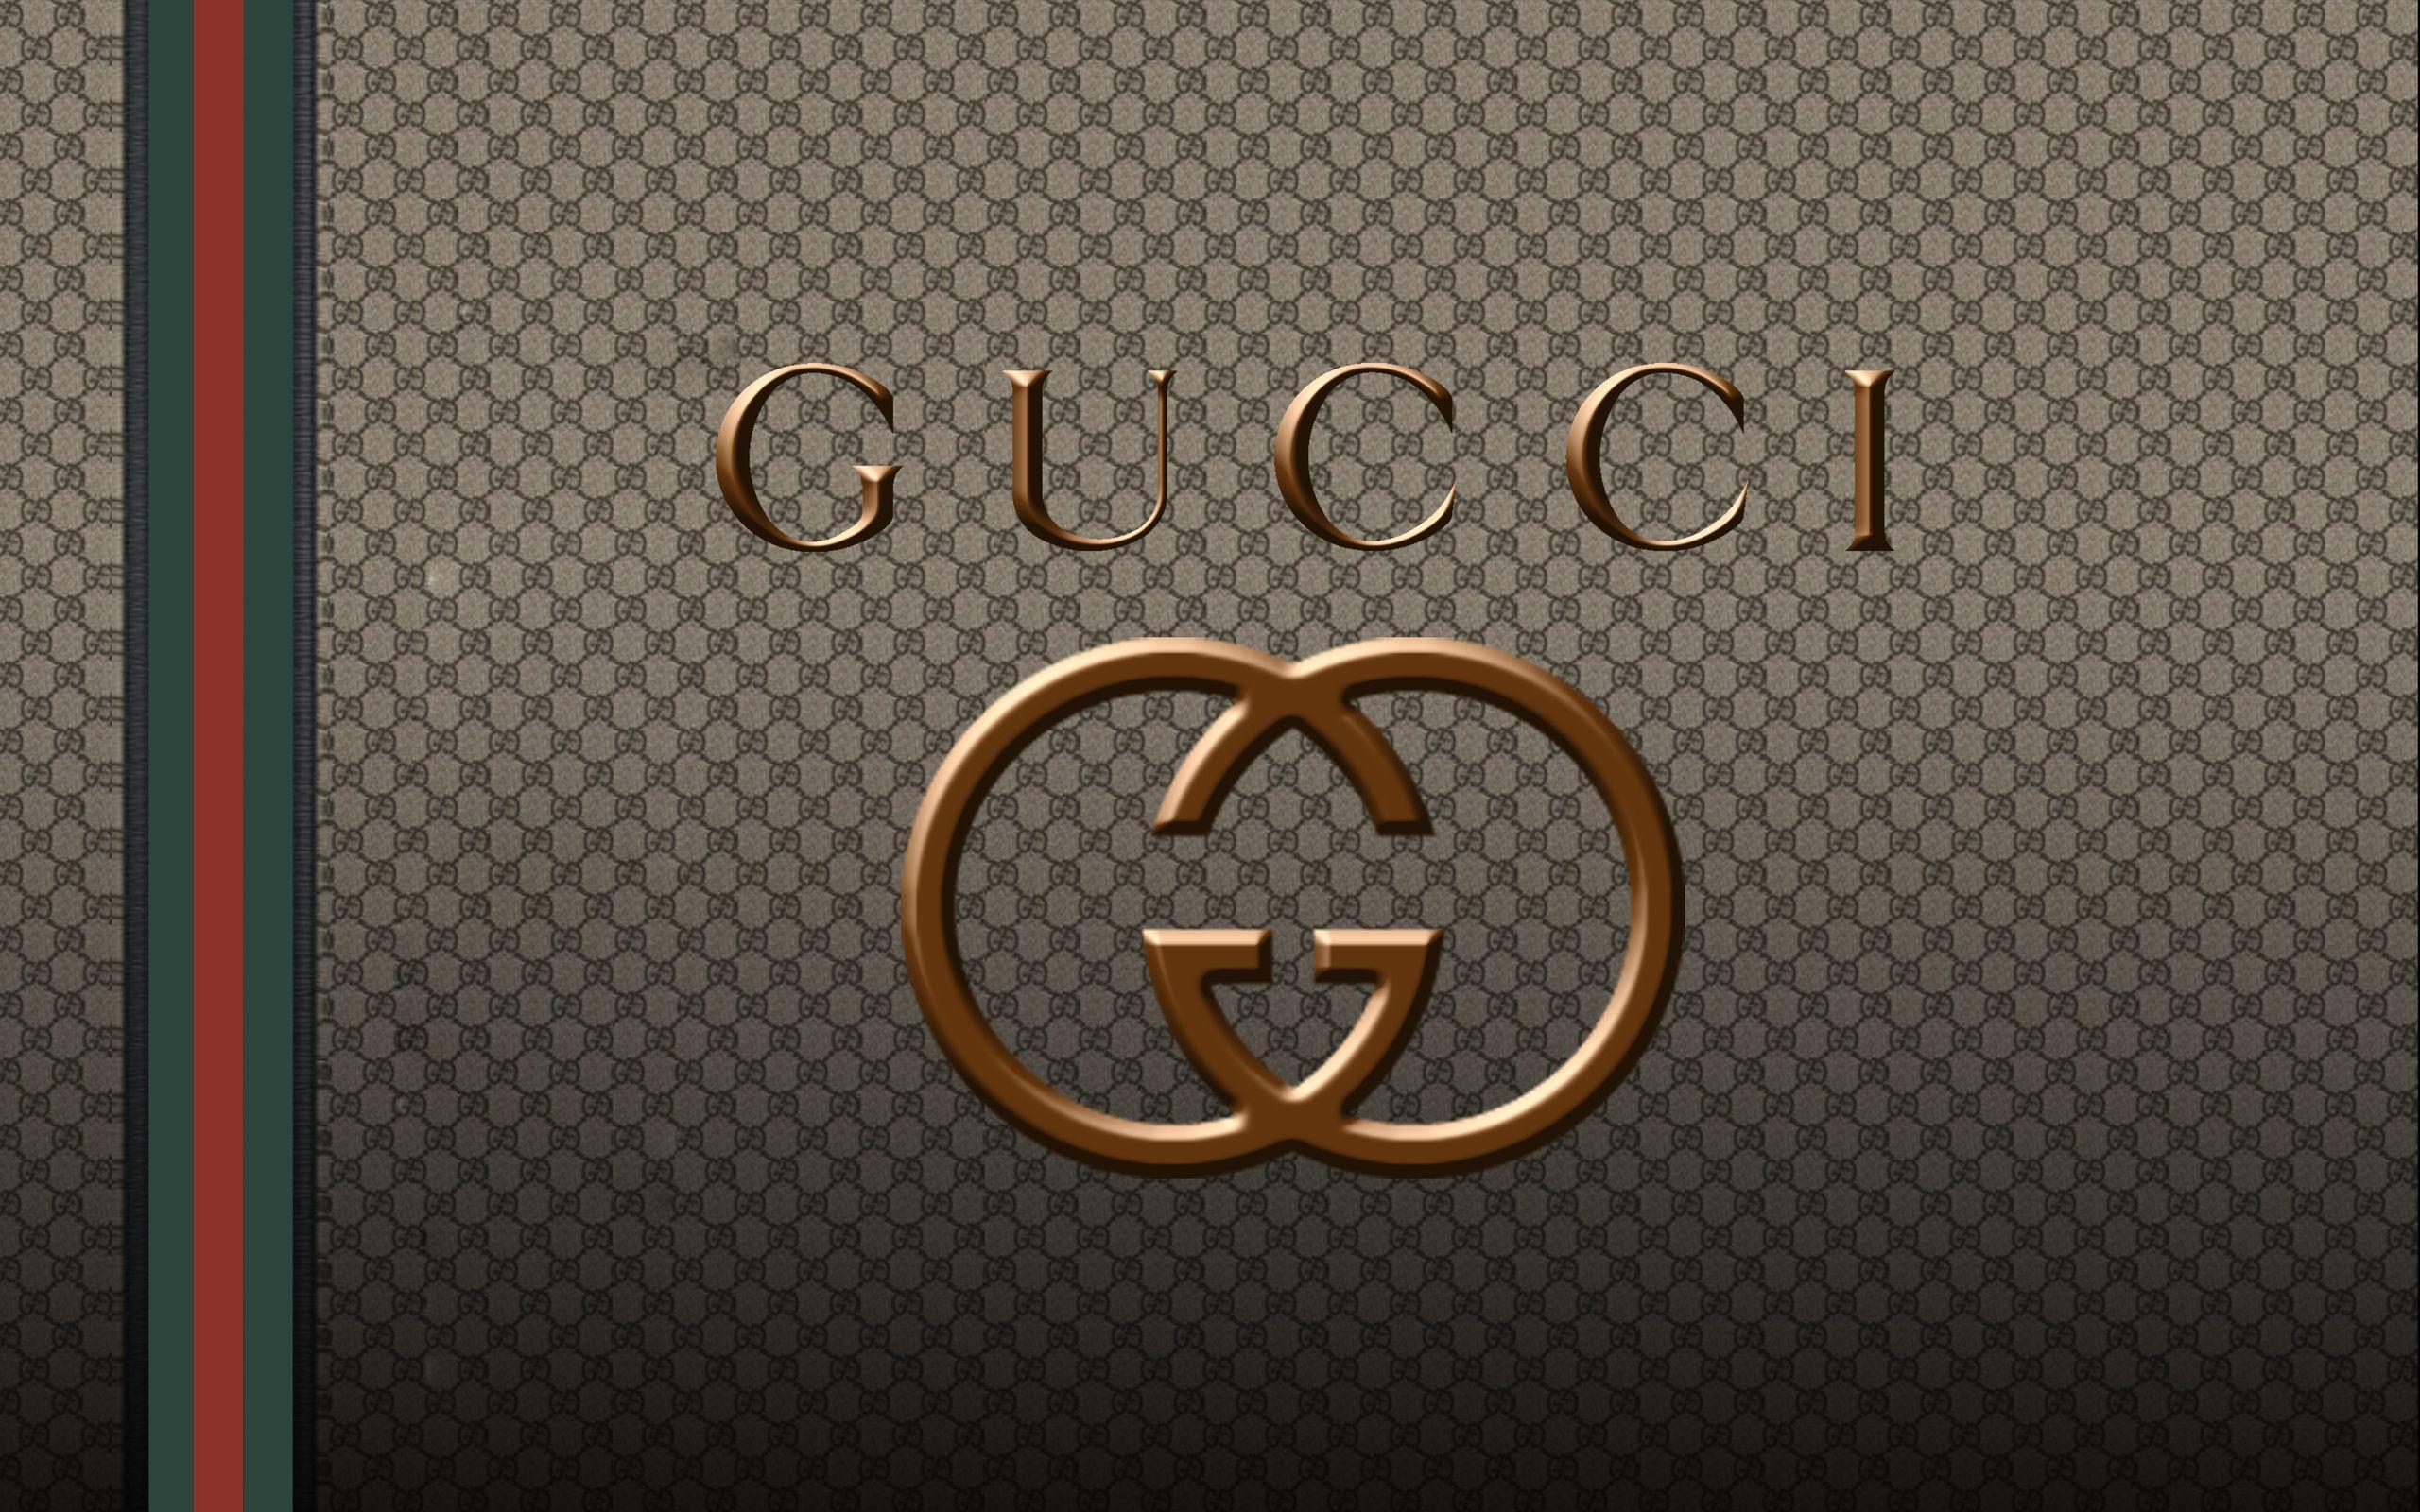 Gucci Apple Wallpaper Free Gucci Apple Background